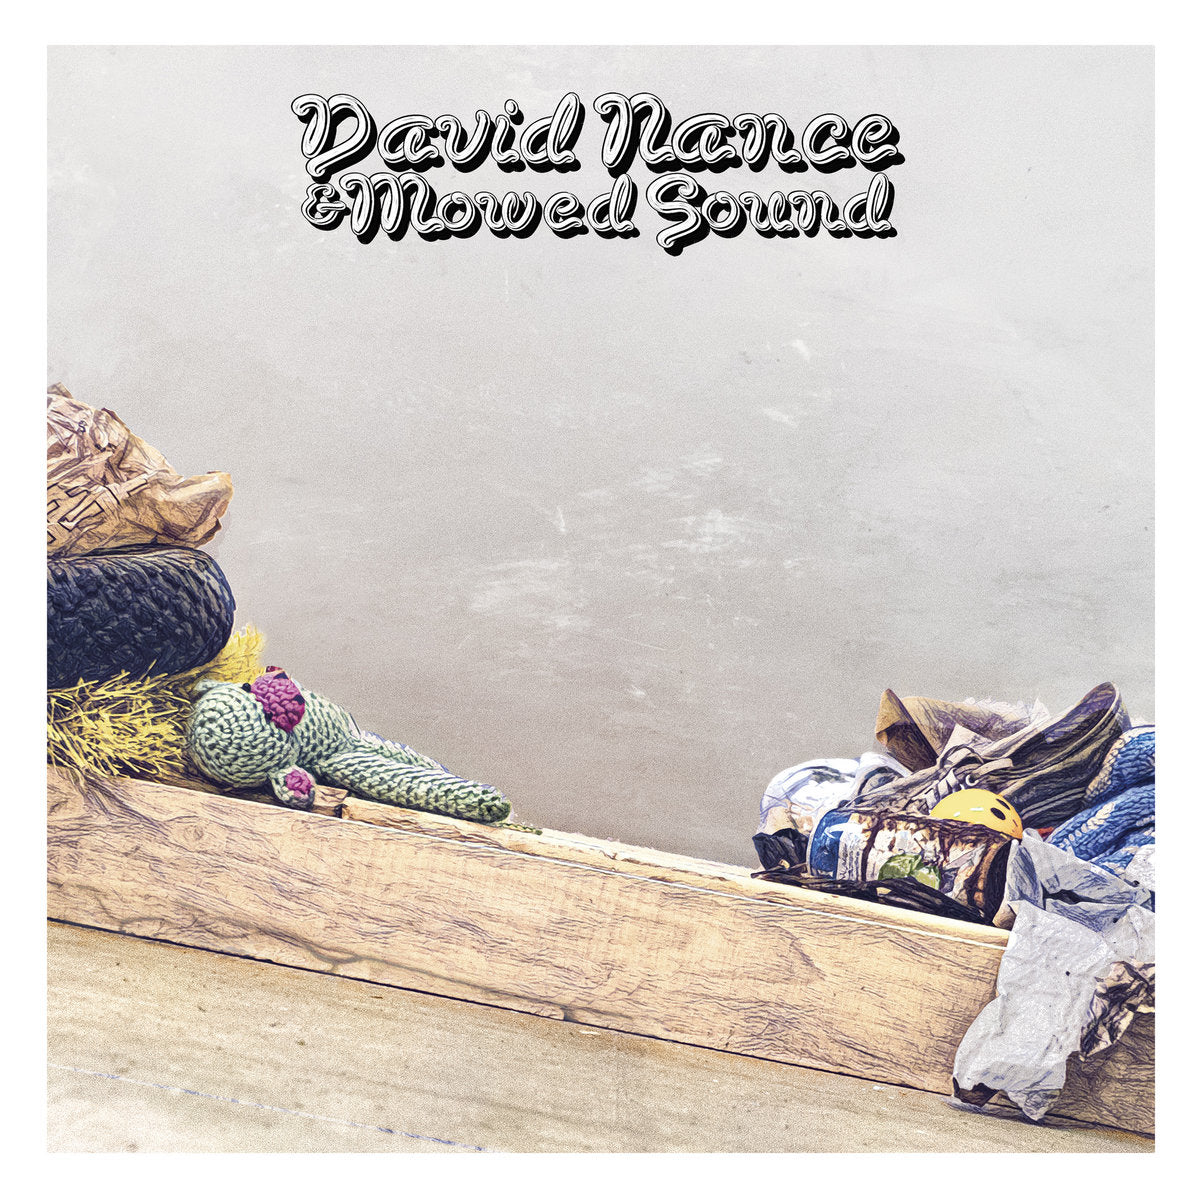 DAVID NANCE - "DAVID NANCE & MOWED SOUND" LP